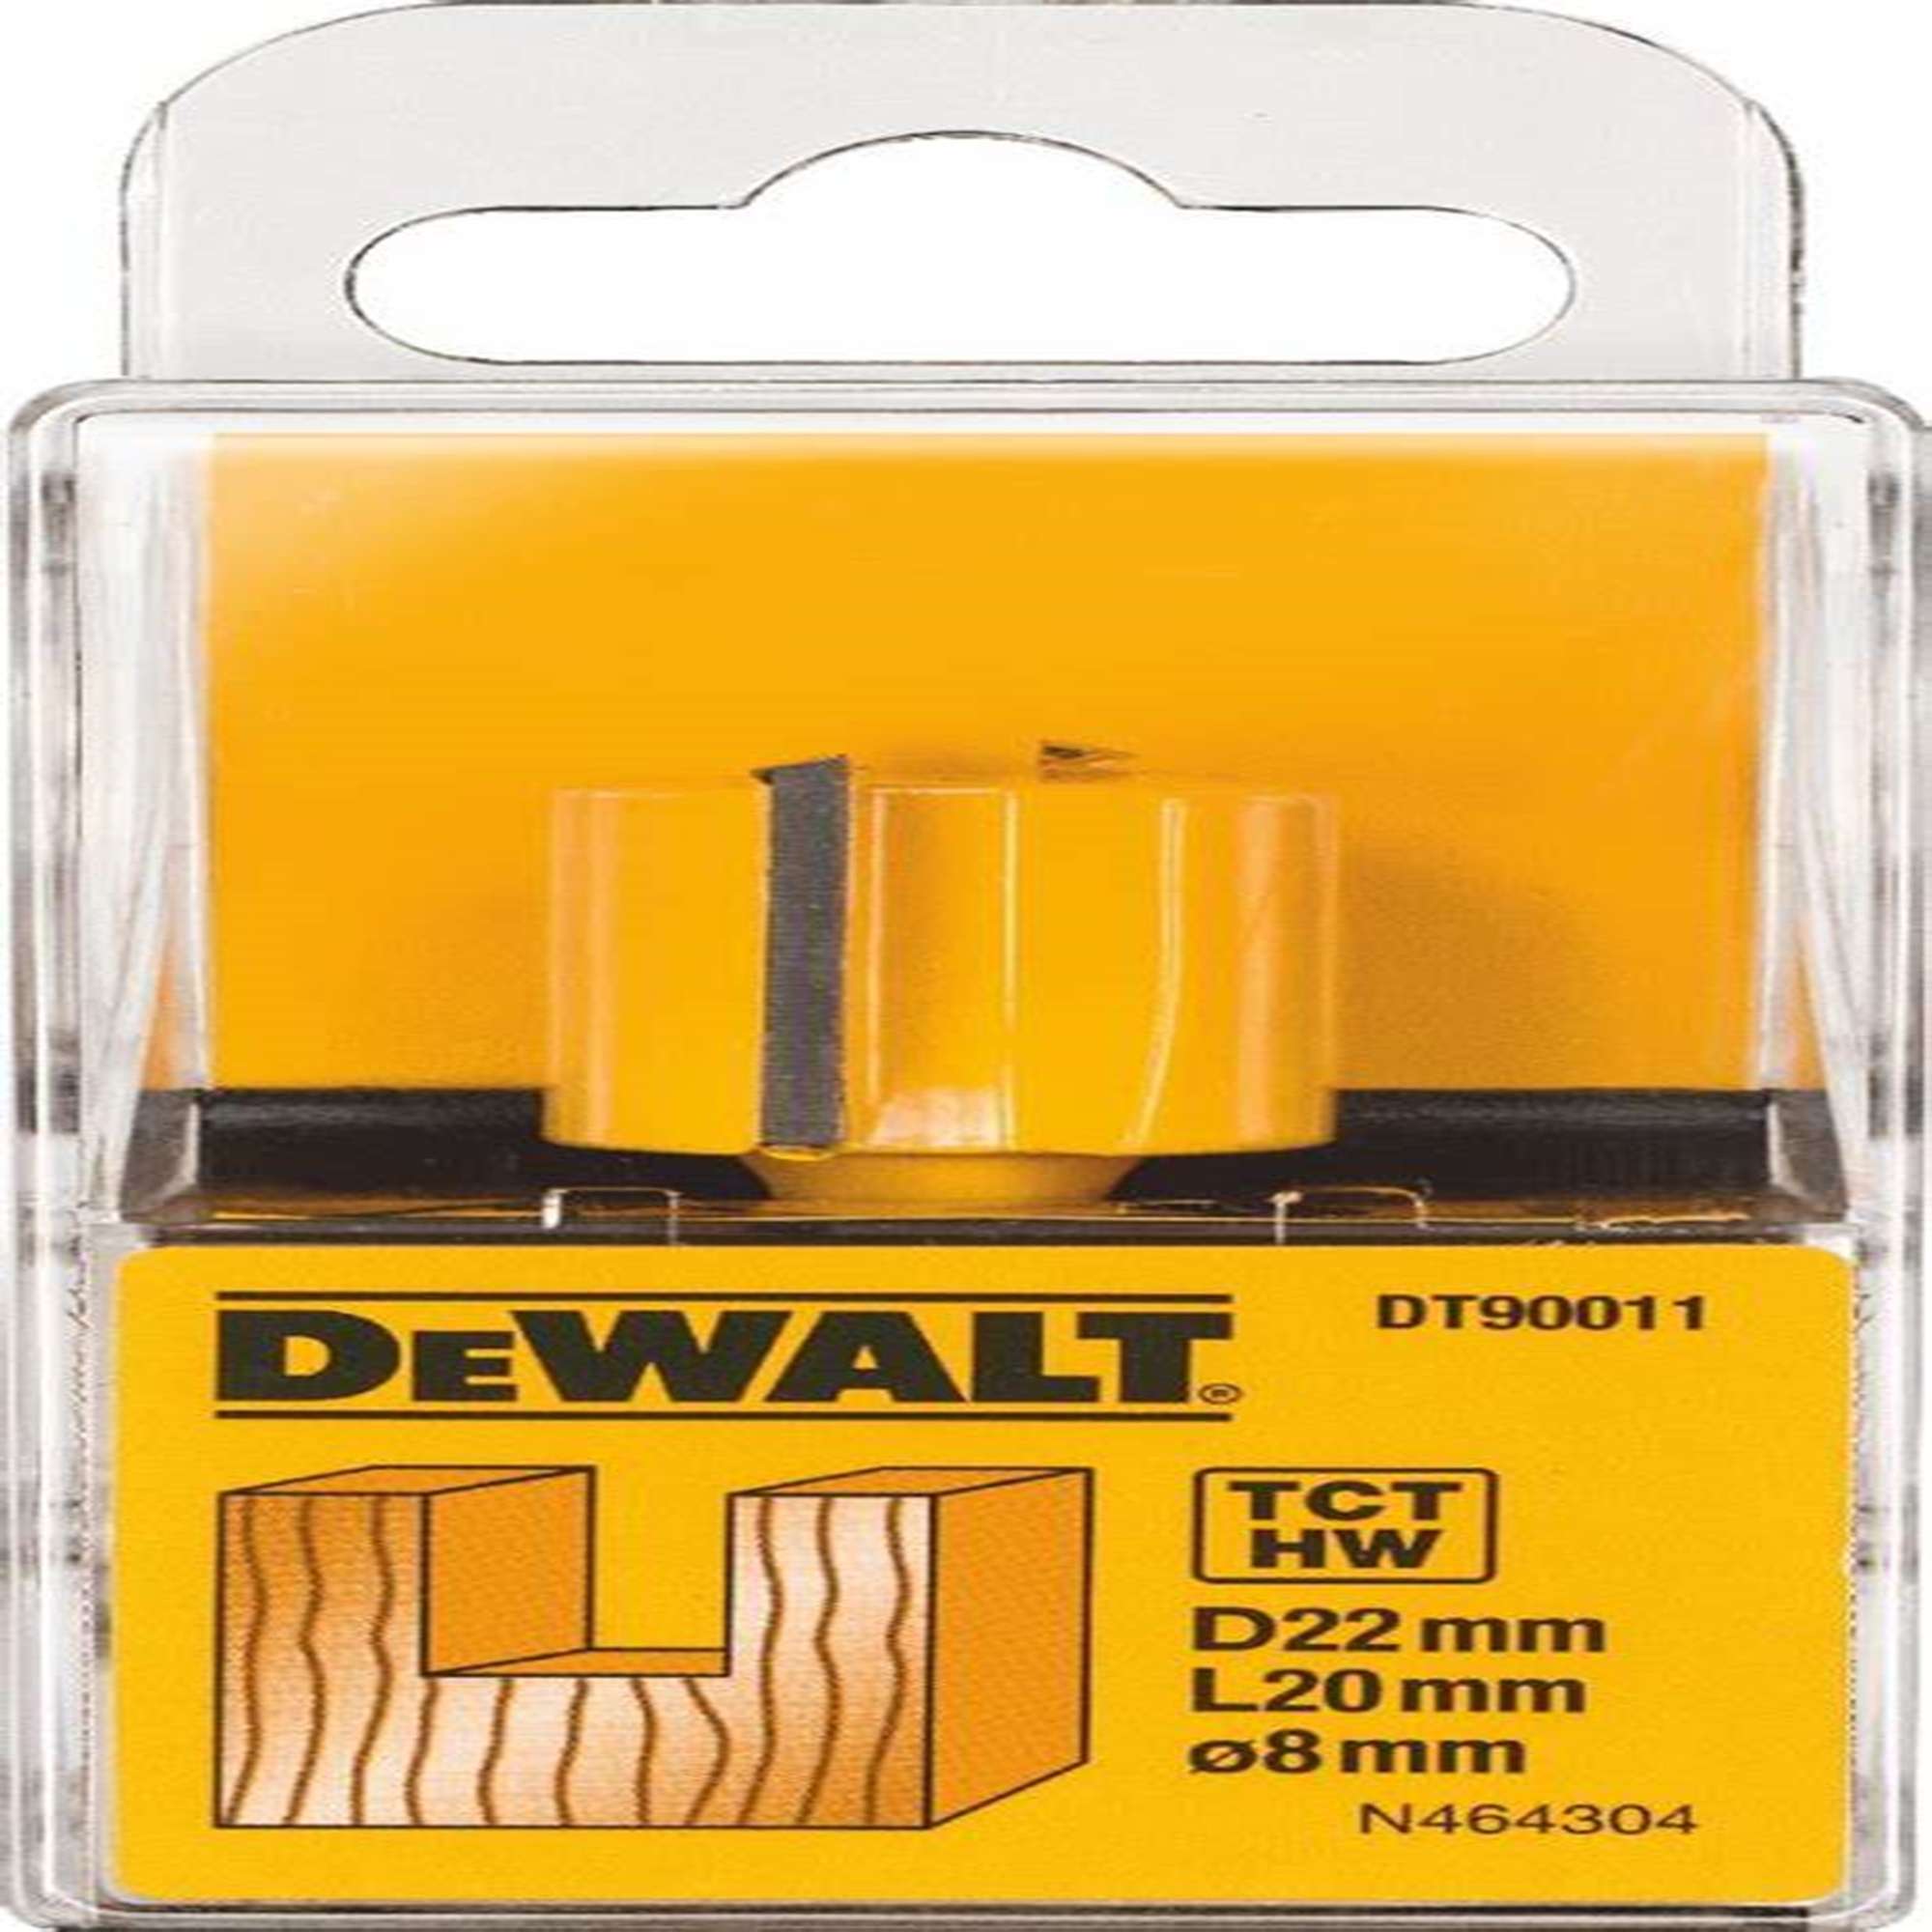 Dewalt Dt90011-Qz Milling Cutter